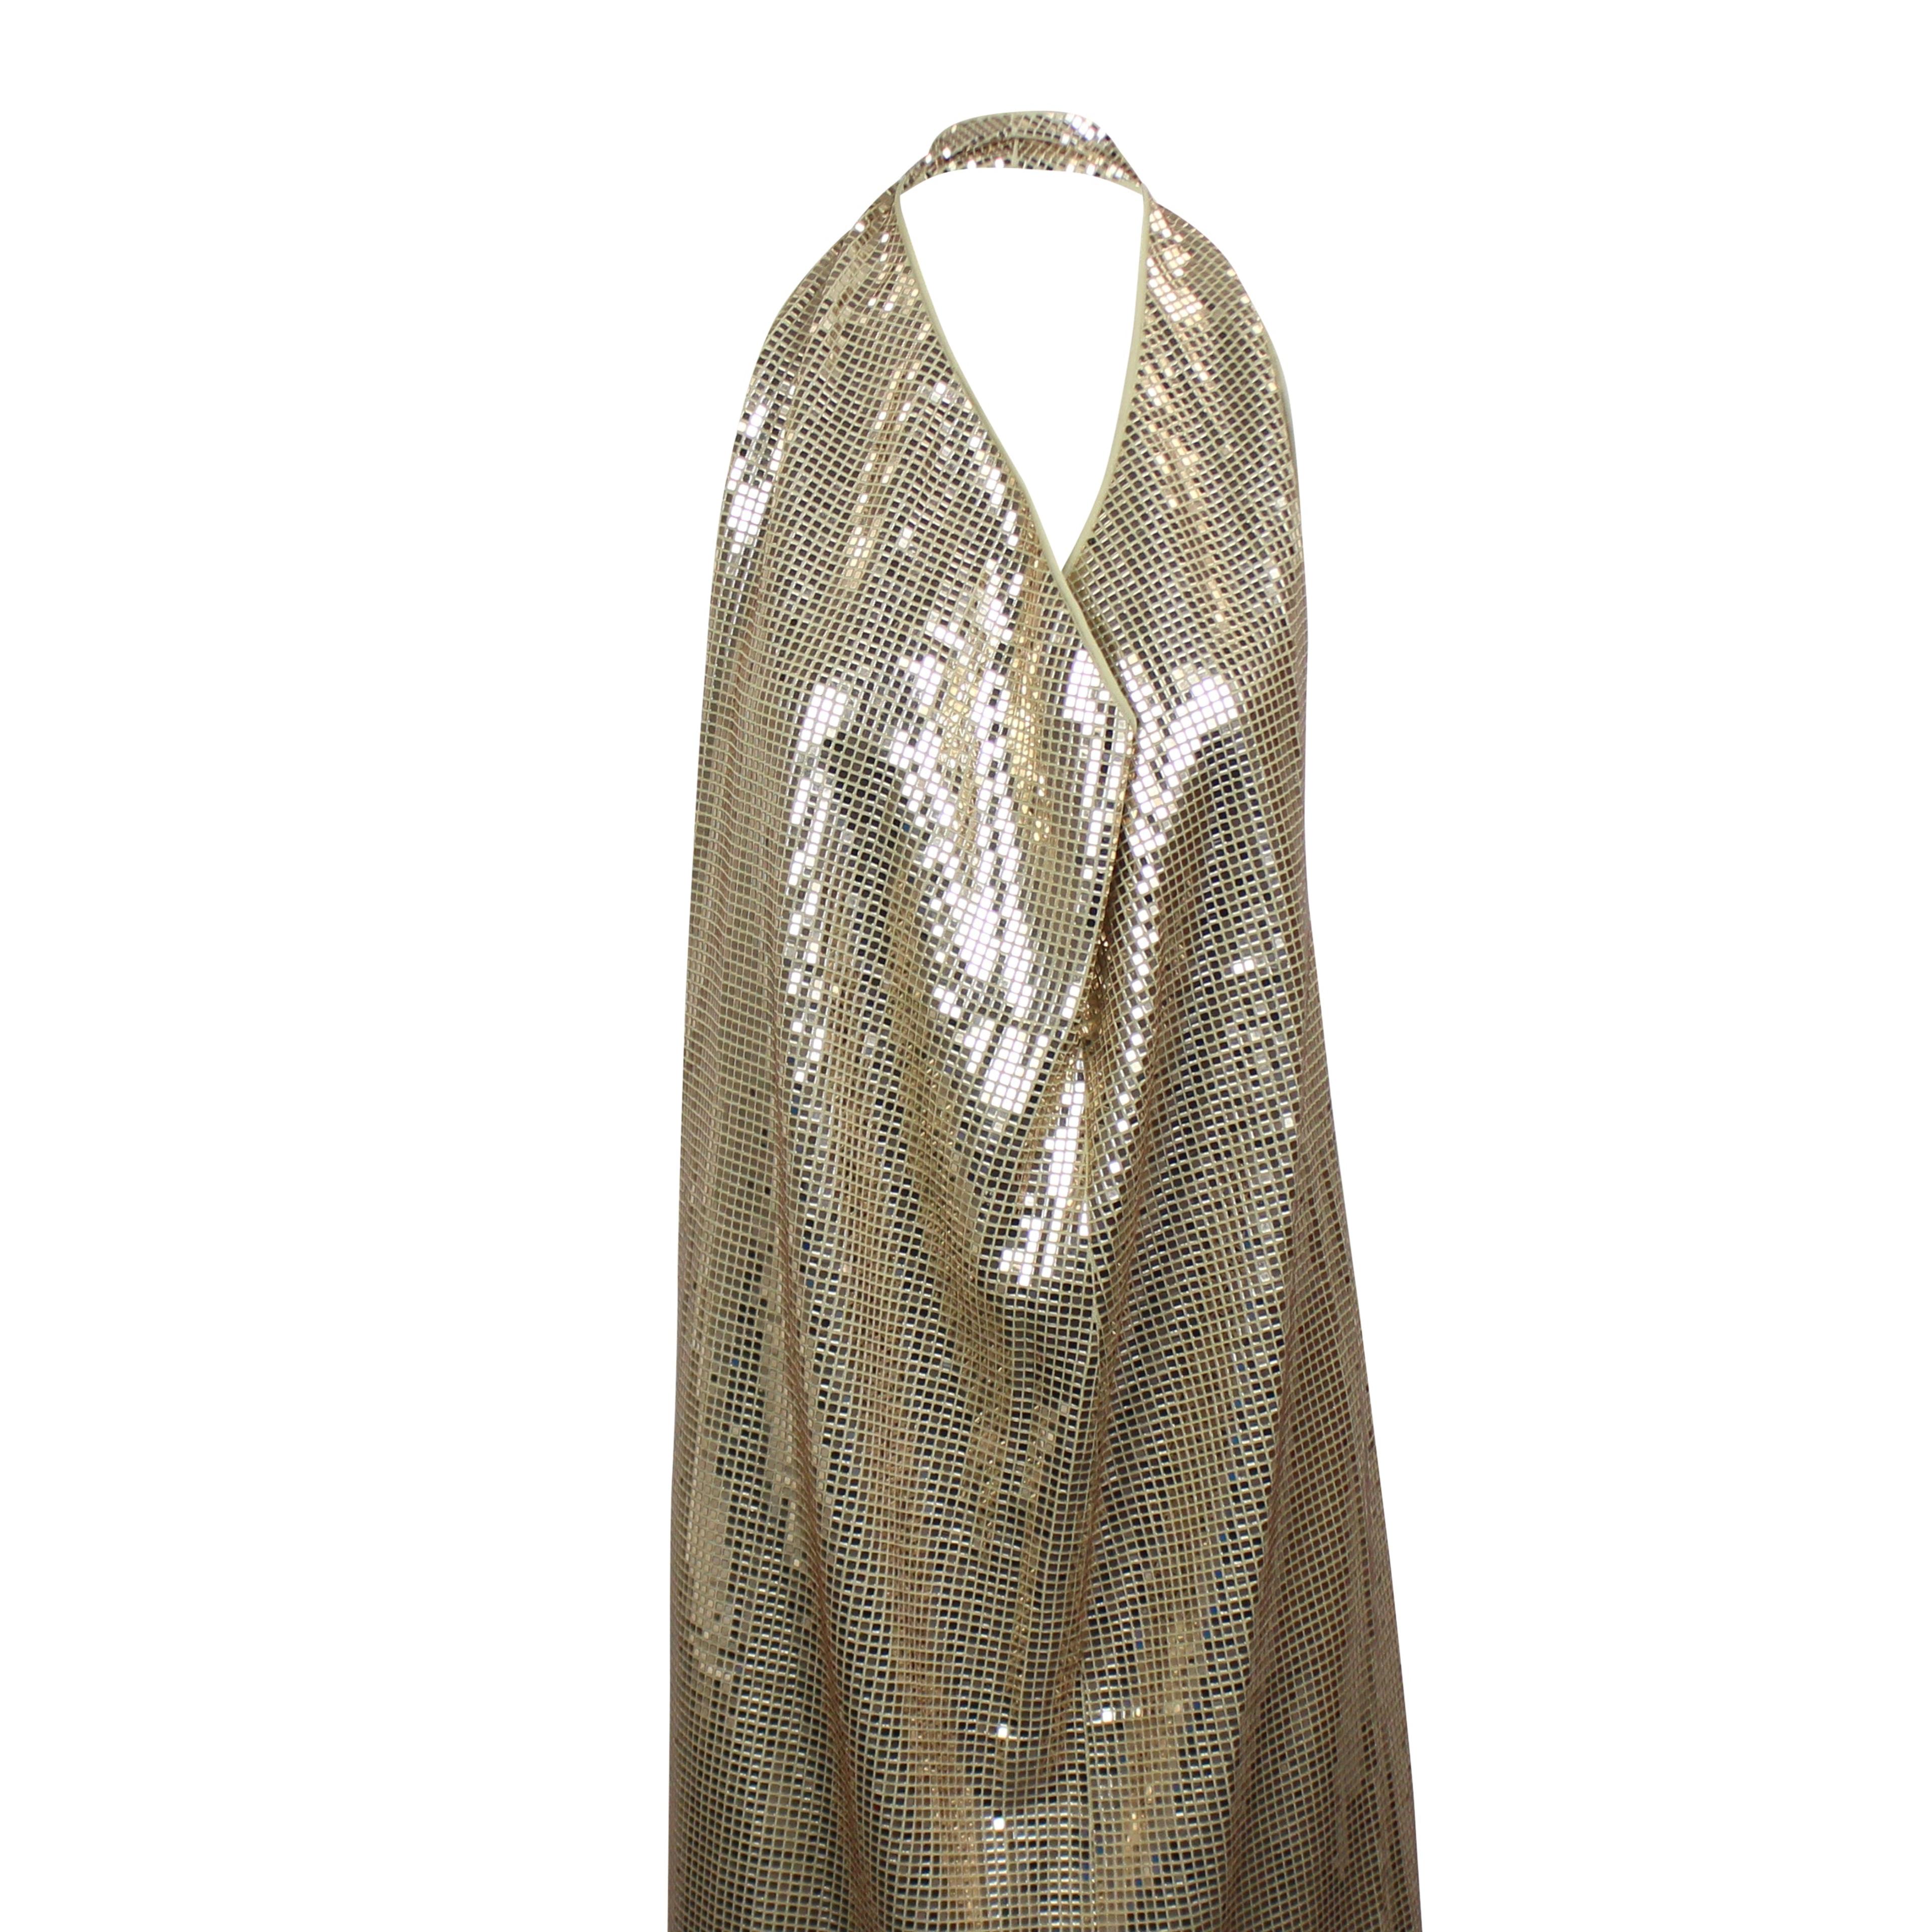 Alternate View 1 of Gold Drape Halter Sequin Mid Dress